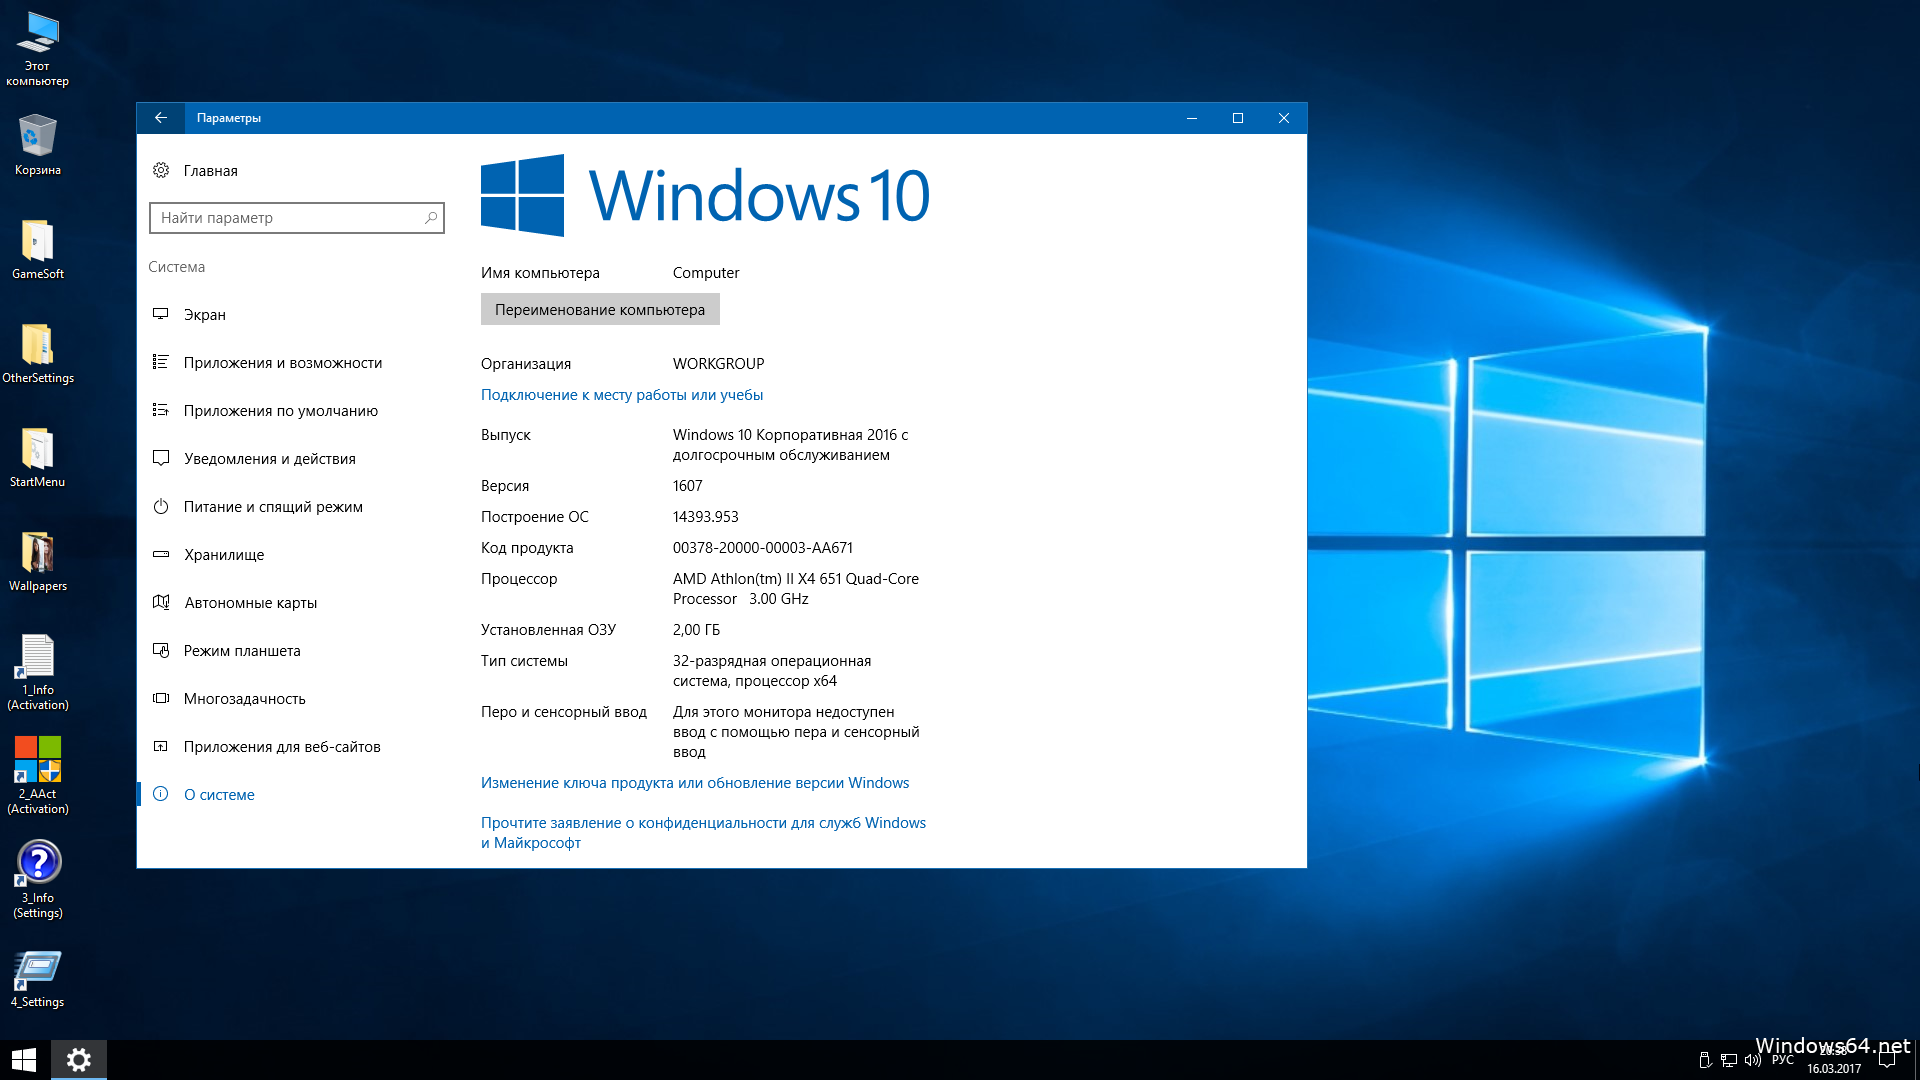 Windows 10 максимальная x64. Windows 10 Pro корпоративная. Windows 10 Enterprise 2016 LTSB. Windows 10 Enterprise Box. Операционная система Windows 10 Pro x64.